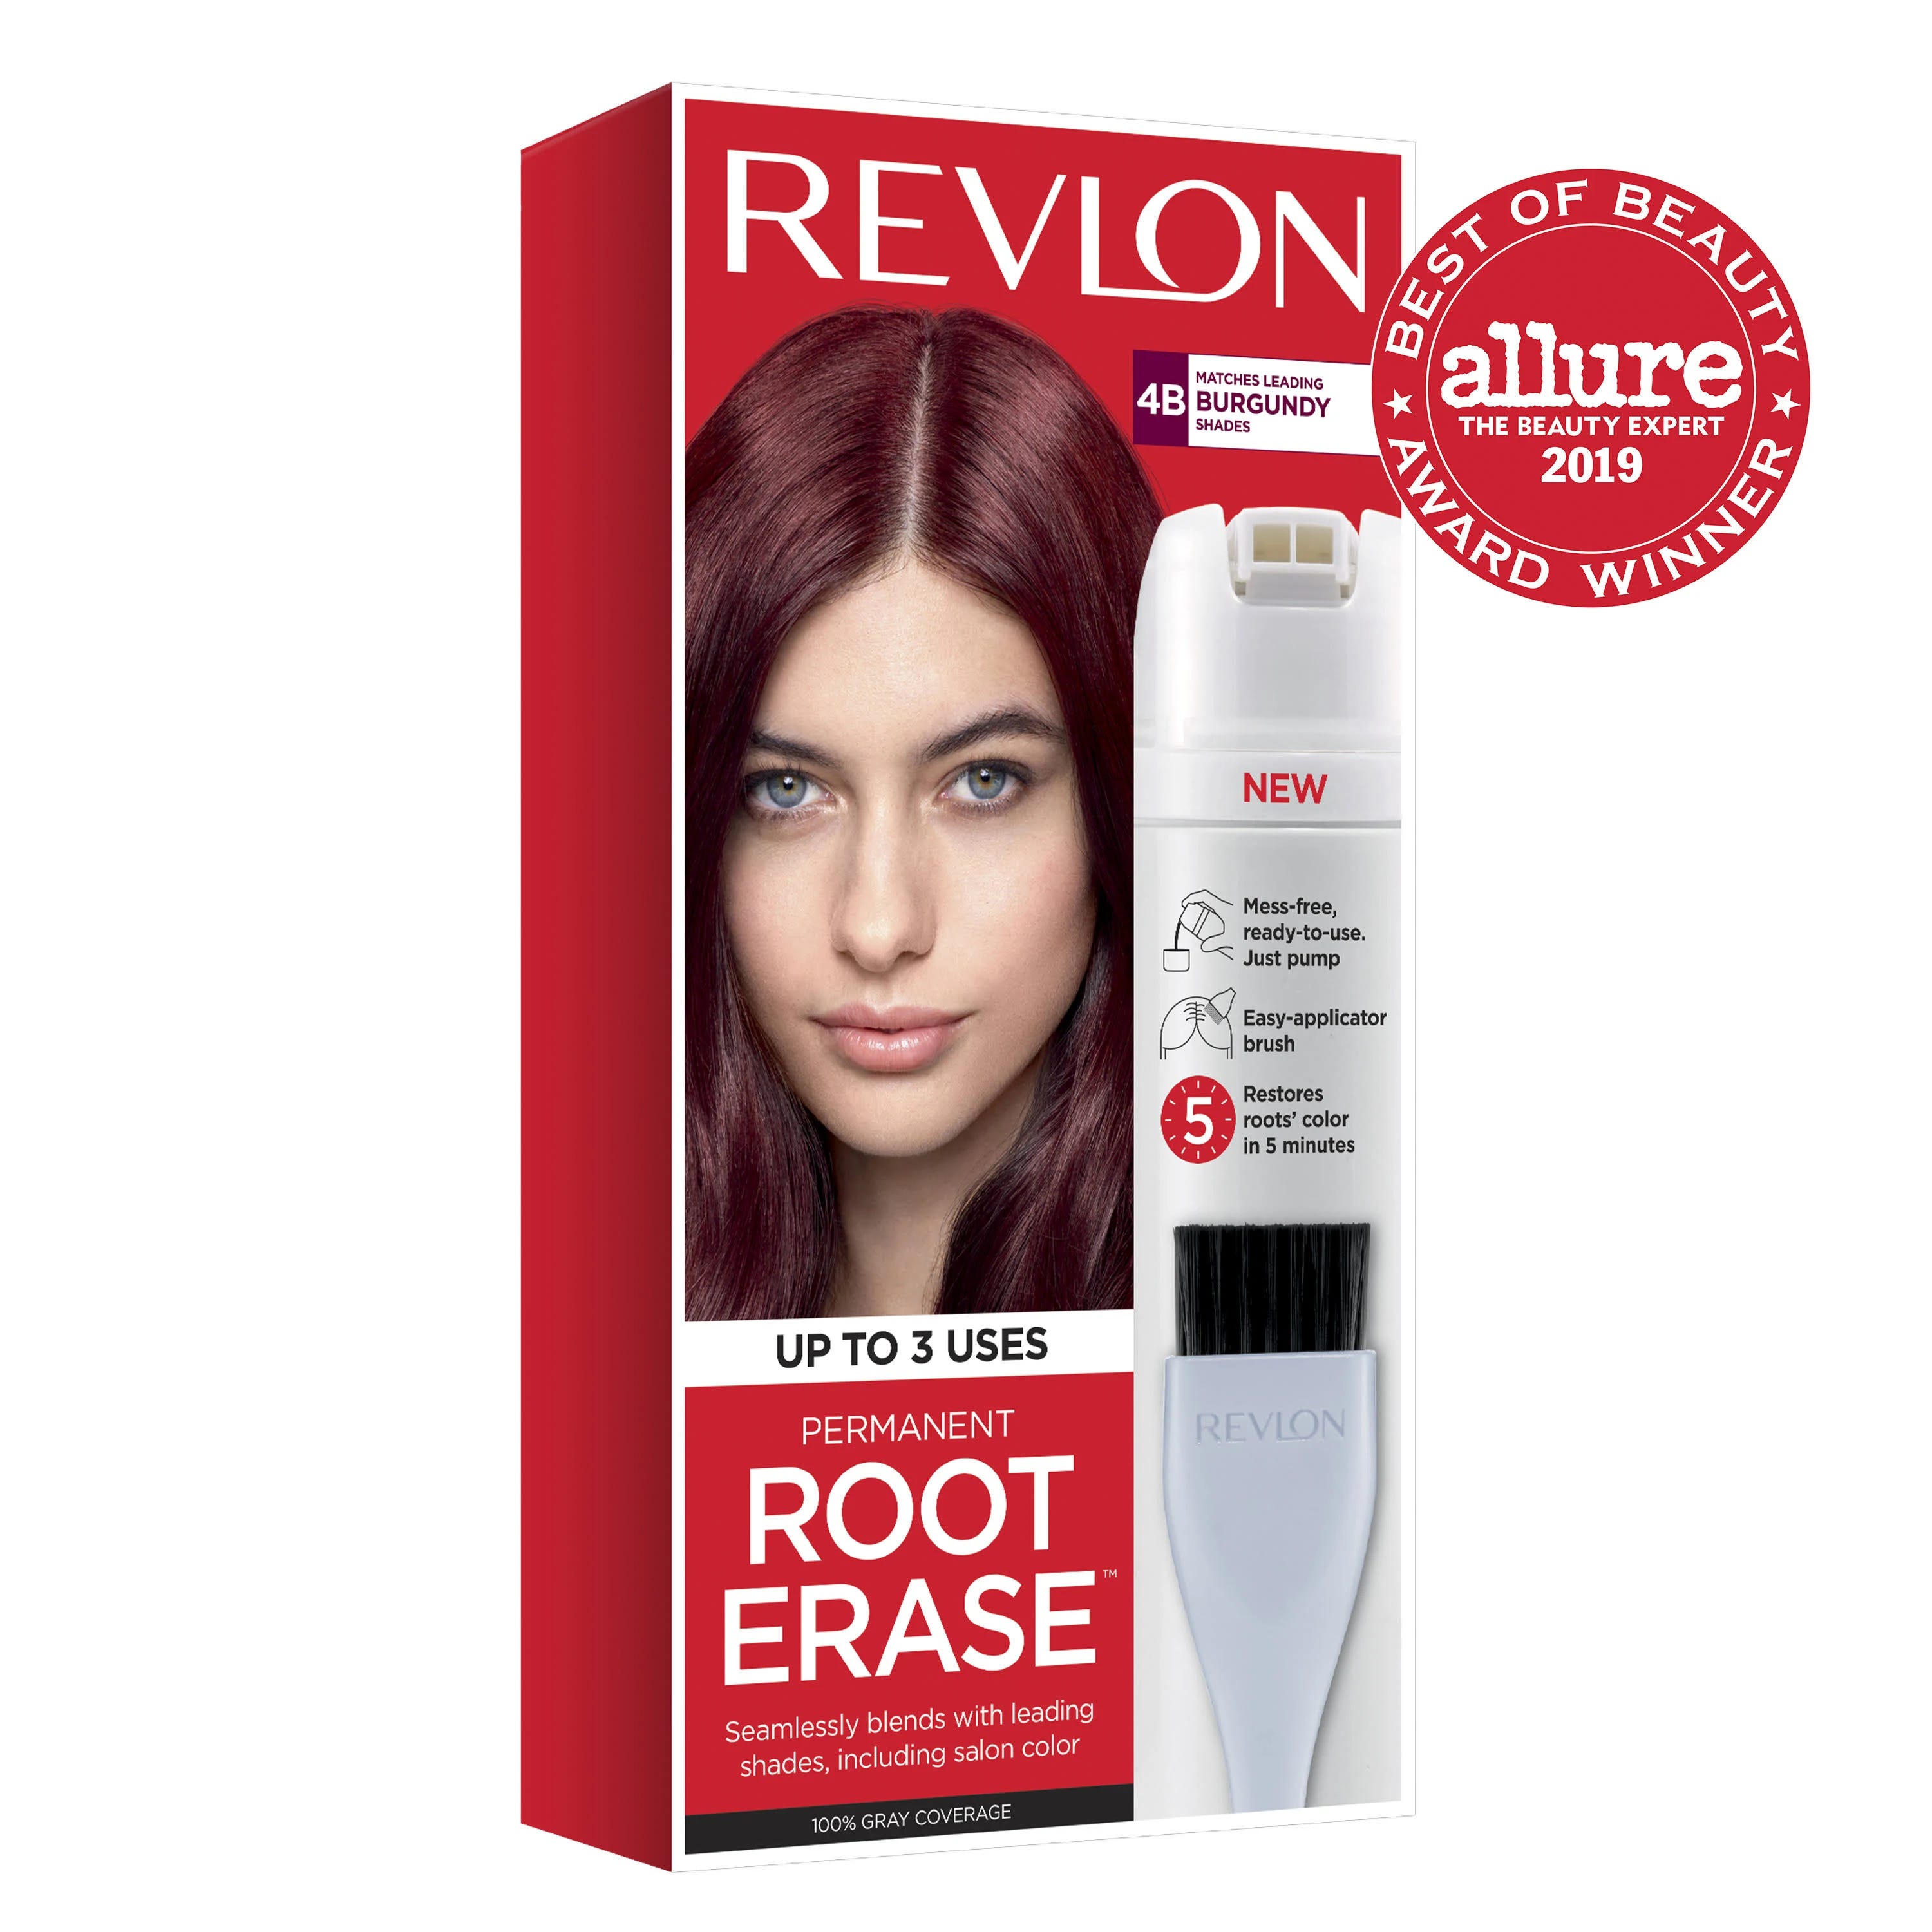 Revlon Root Erase Permanent Hair Color in Burgundy - 4B | Image